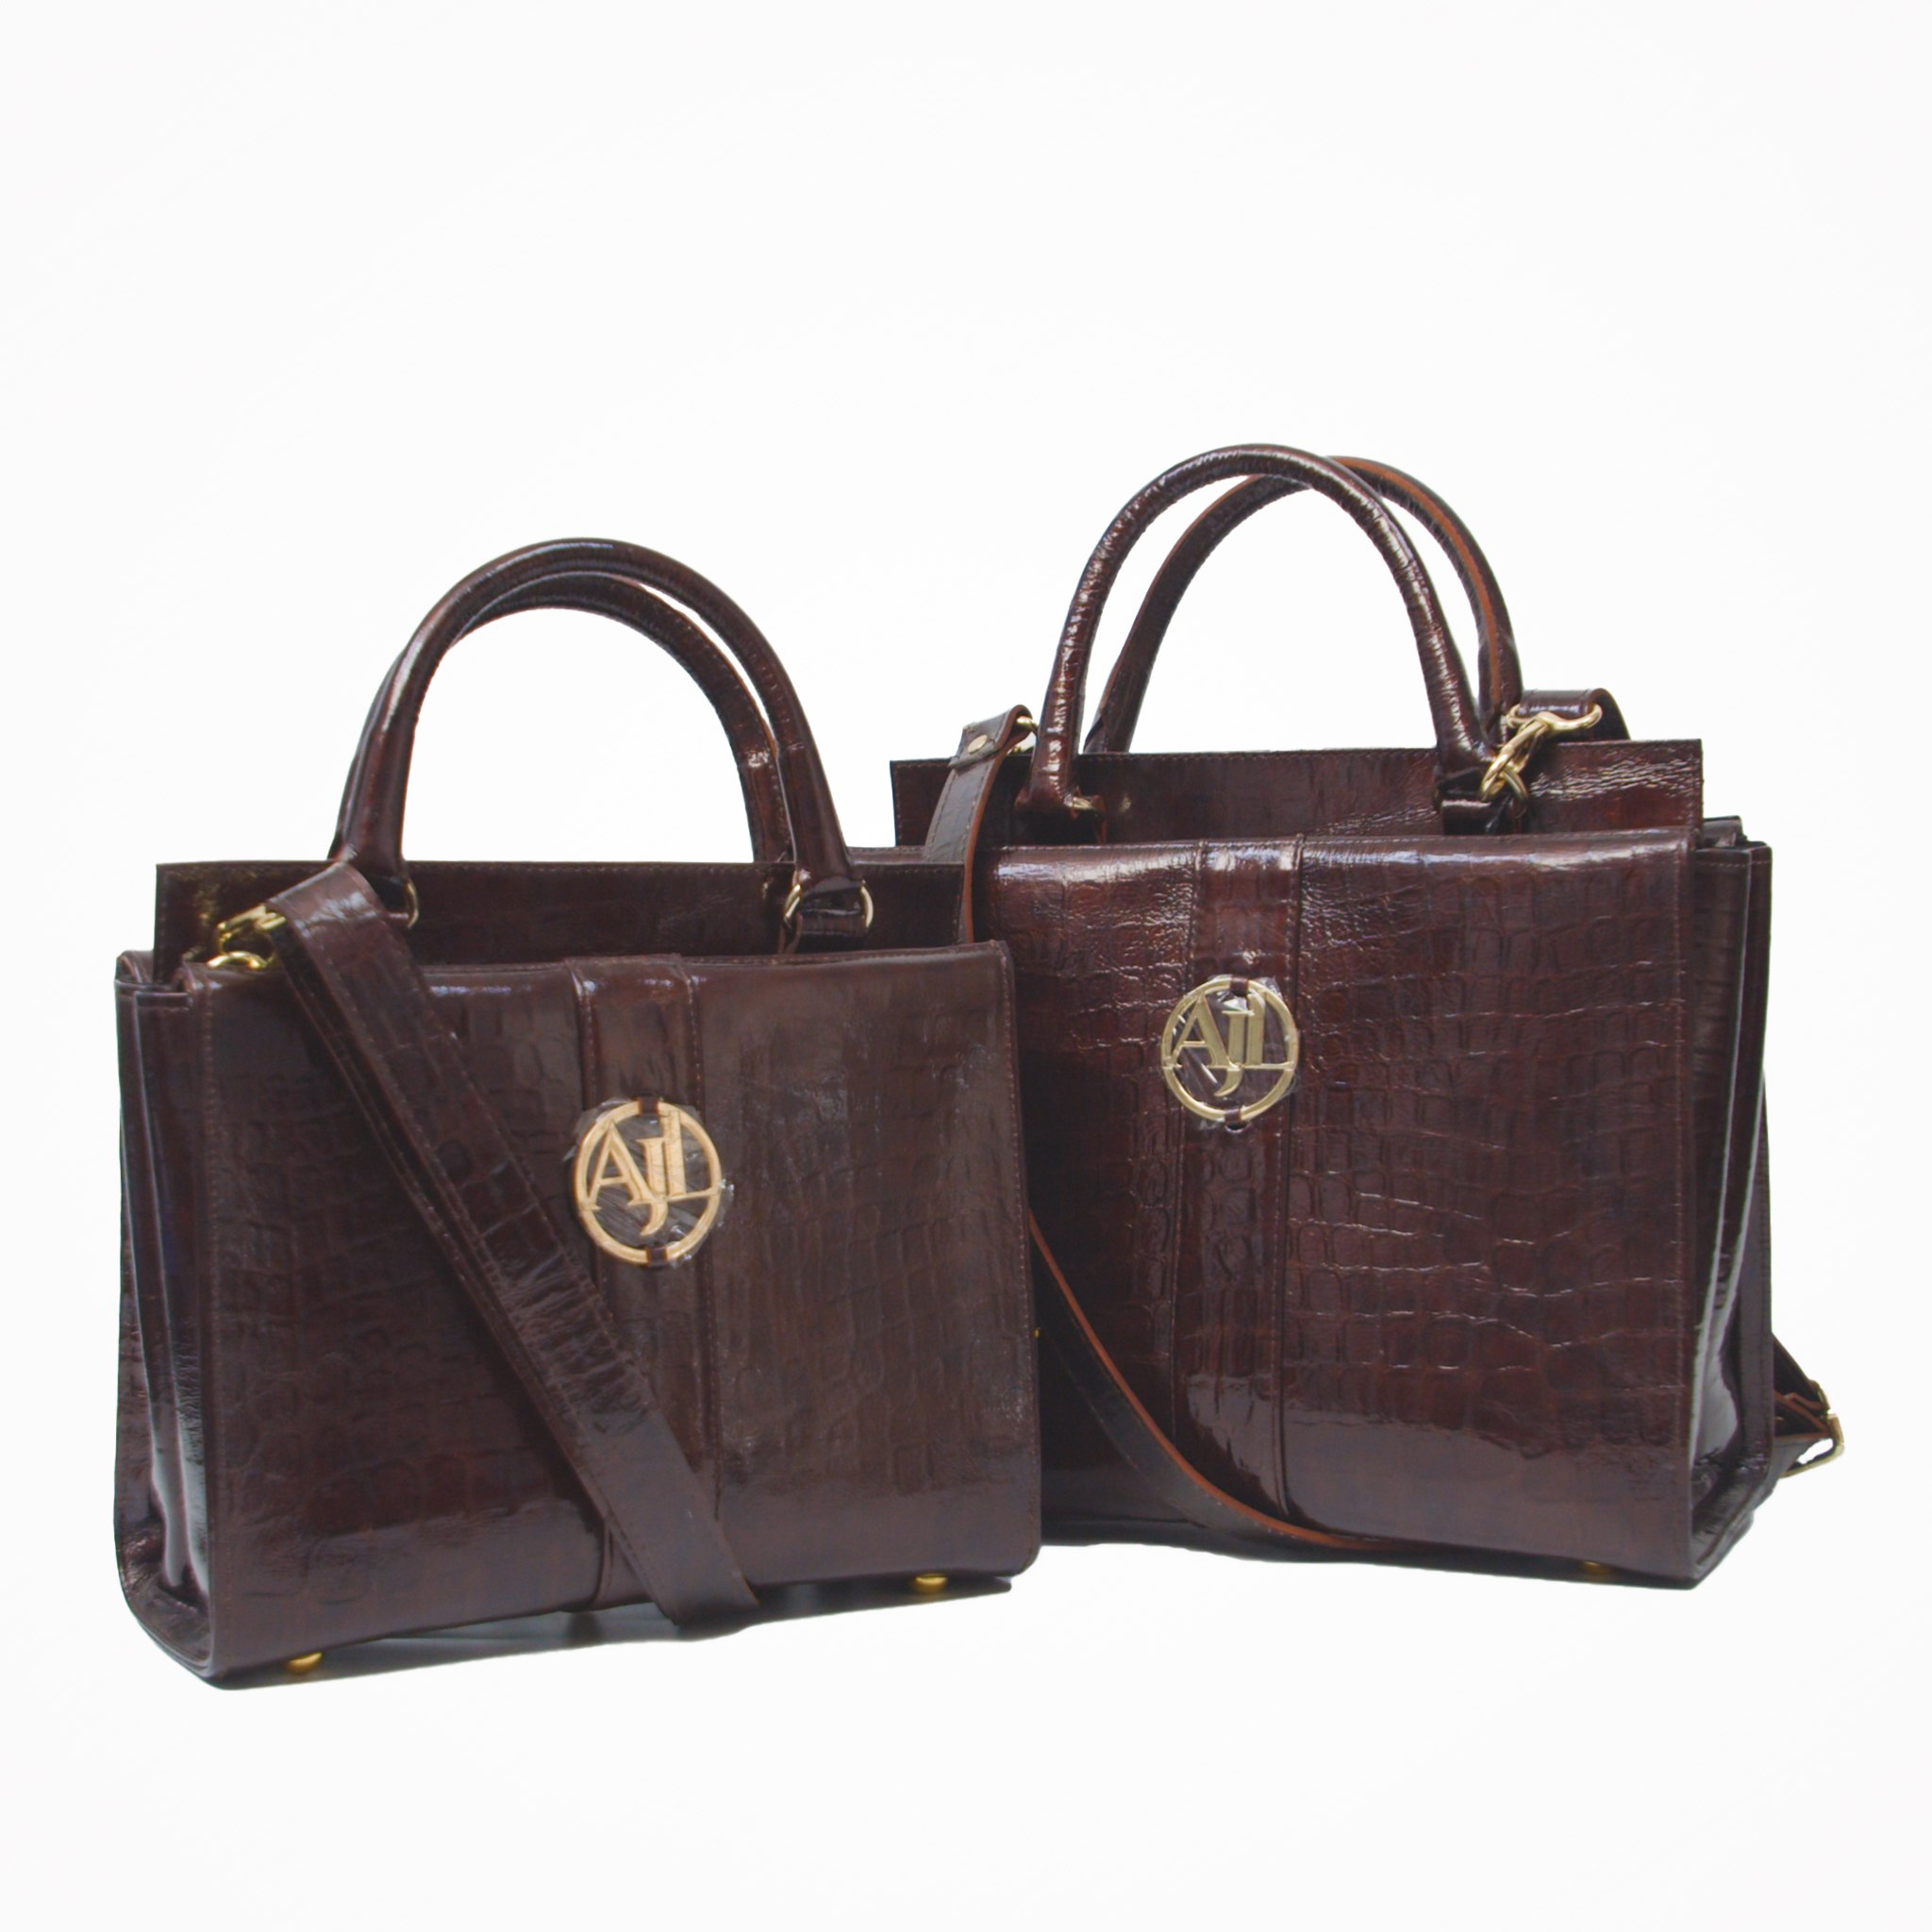 Burgundy croc maxi and midi handbags